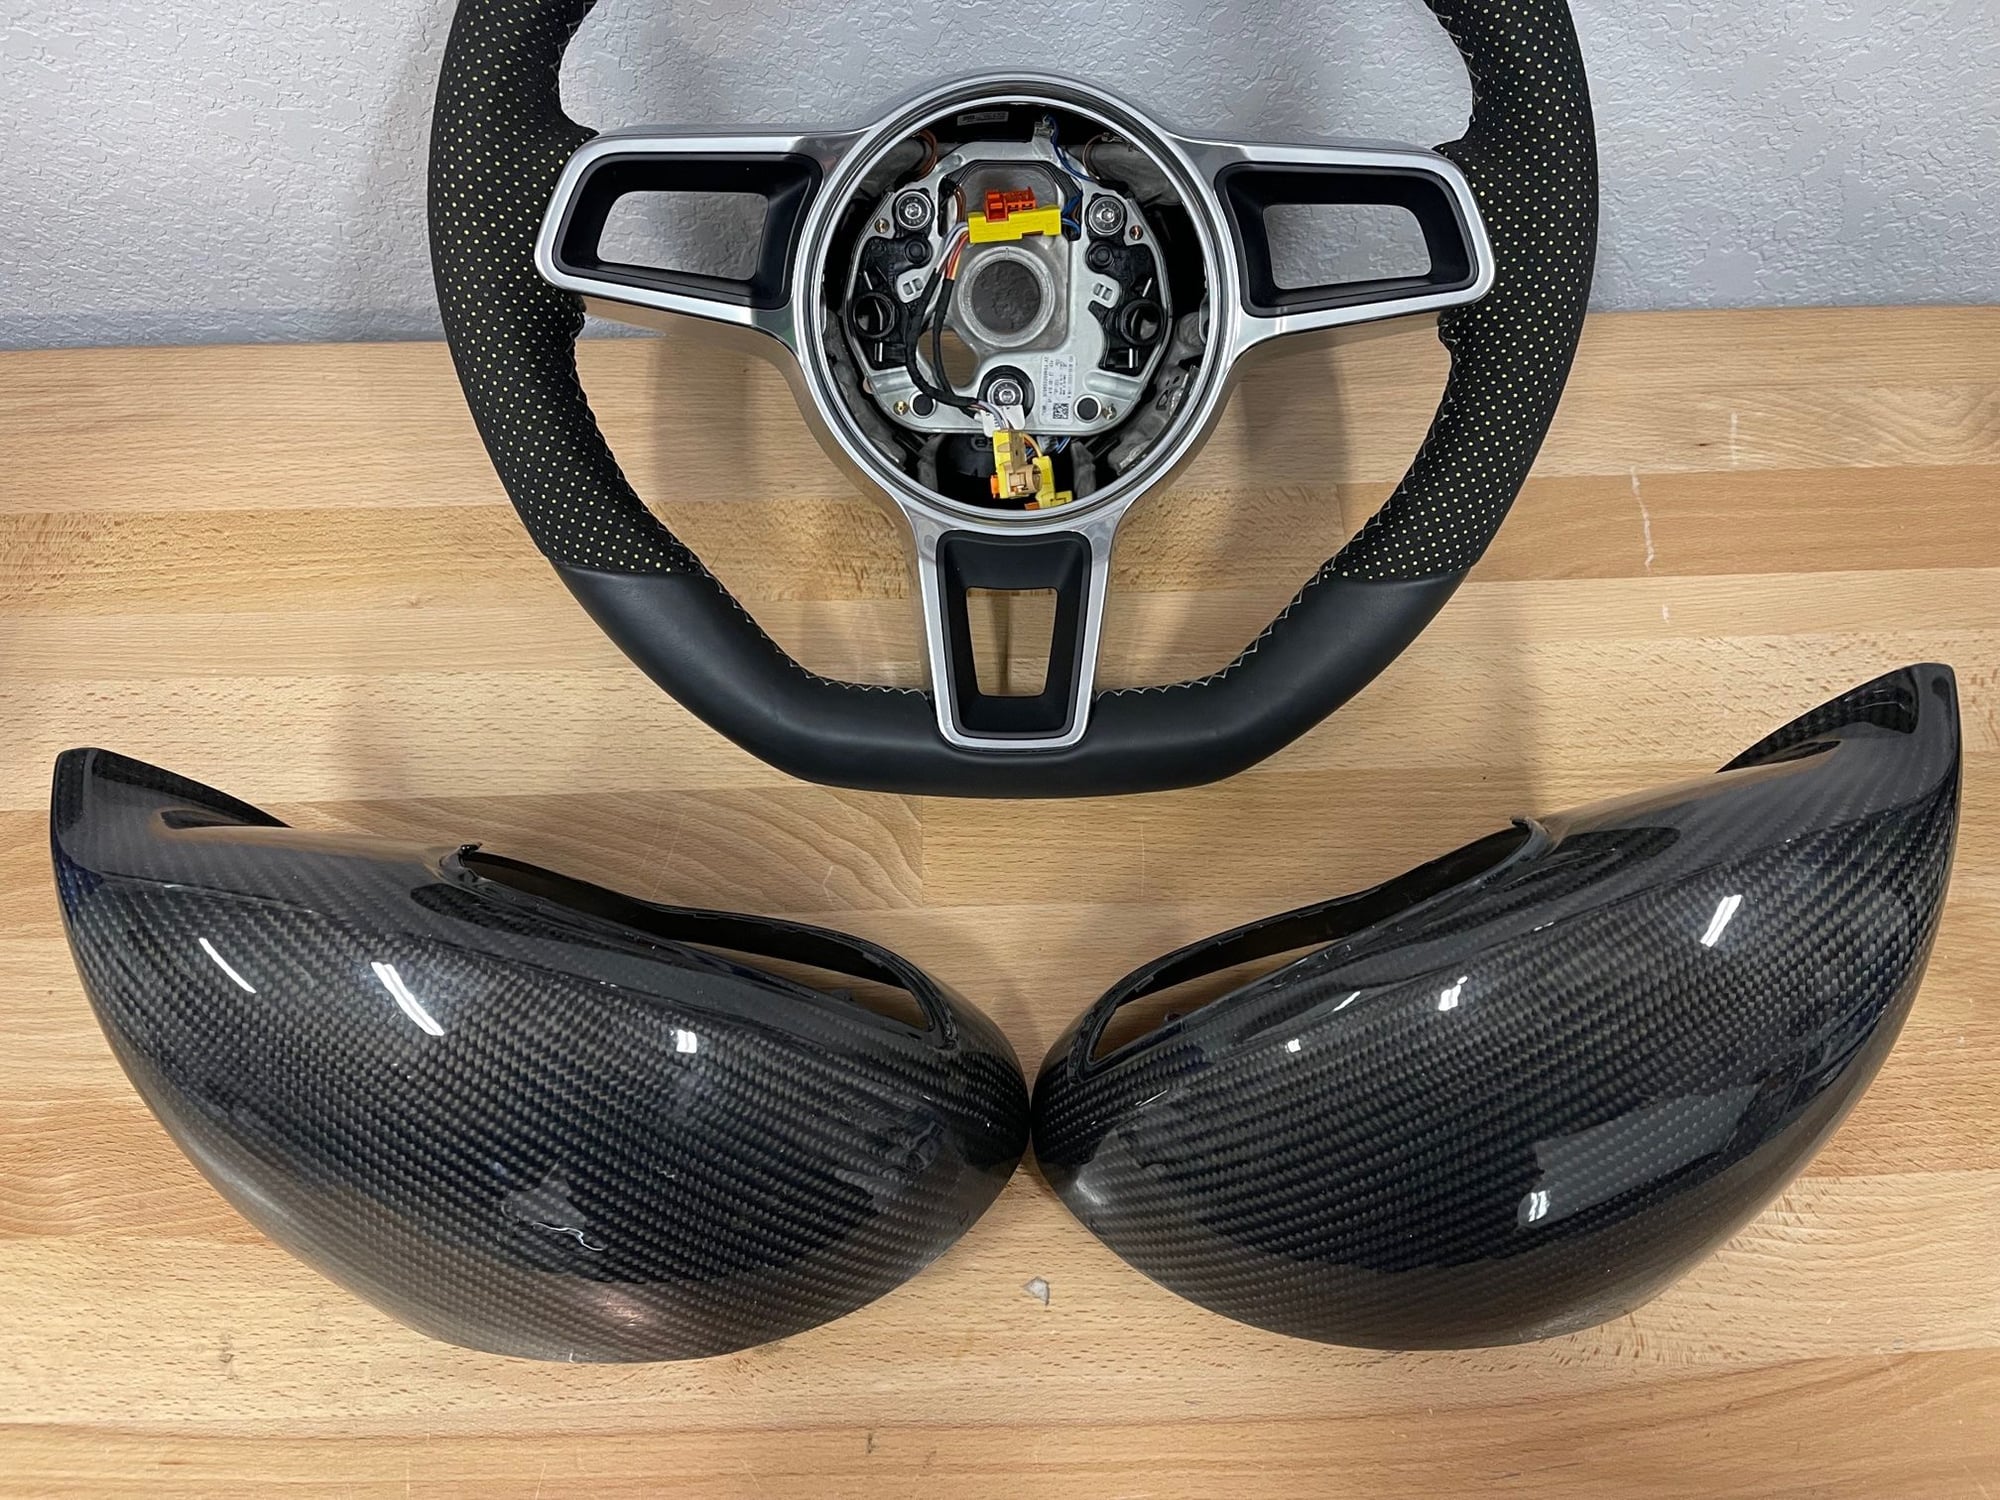 Exterior Body Parts - TechArt Steering wheel & TechArt Carbon Fiber mirror caps for 981 - Used - 2016 Porsche Cayman - Denver, CO 80221, United States